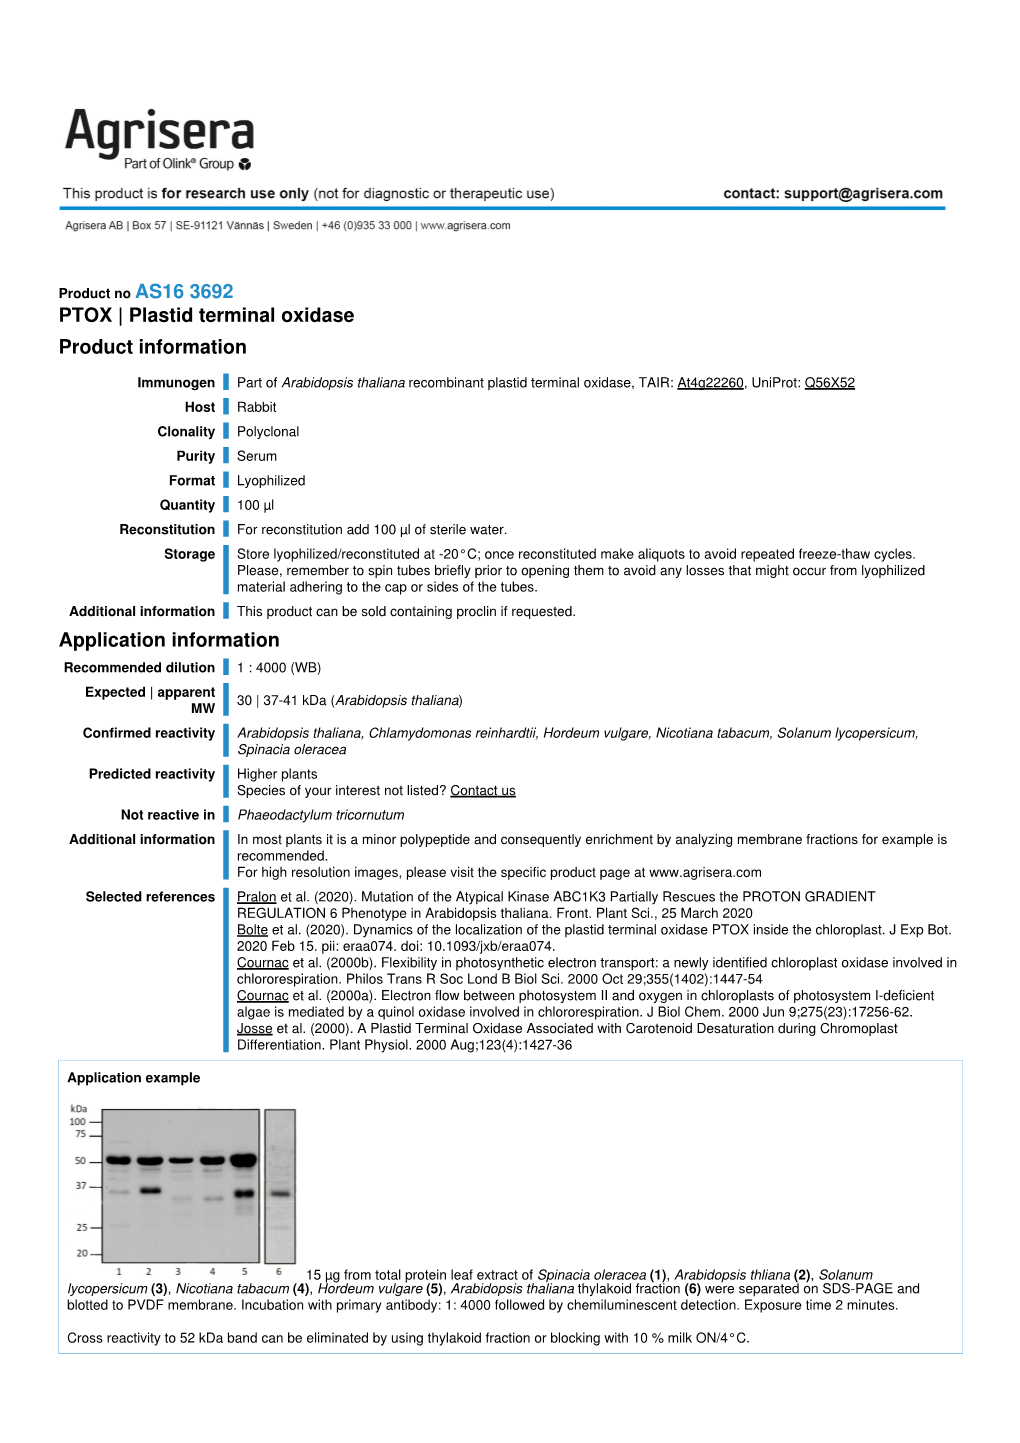 PTOX | Plastid Terminal Oxidase Product Information Application